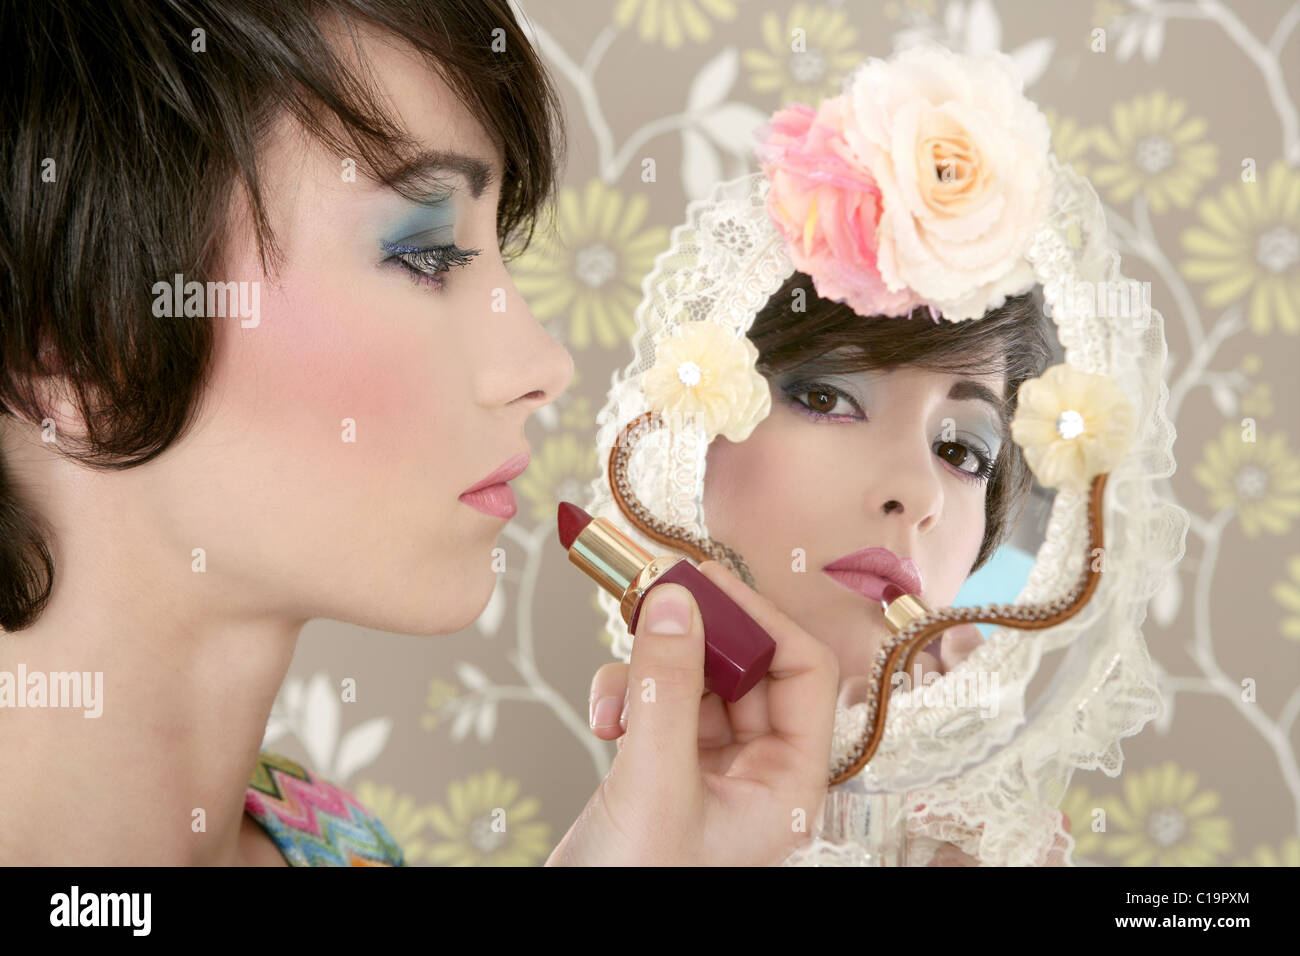 retro woman mirror lipstick makeup tacky fashion vintage wallpaper Stock Photo